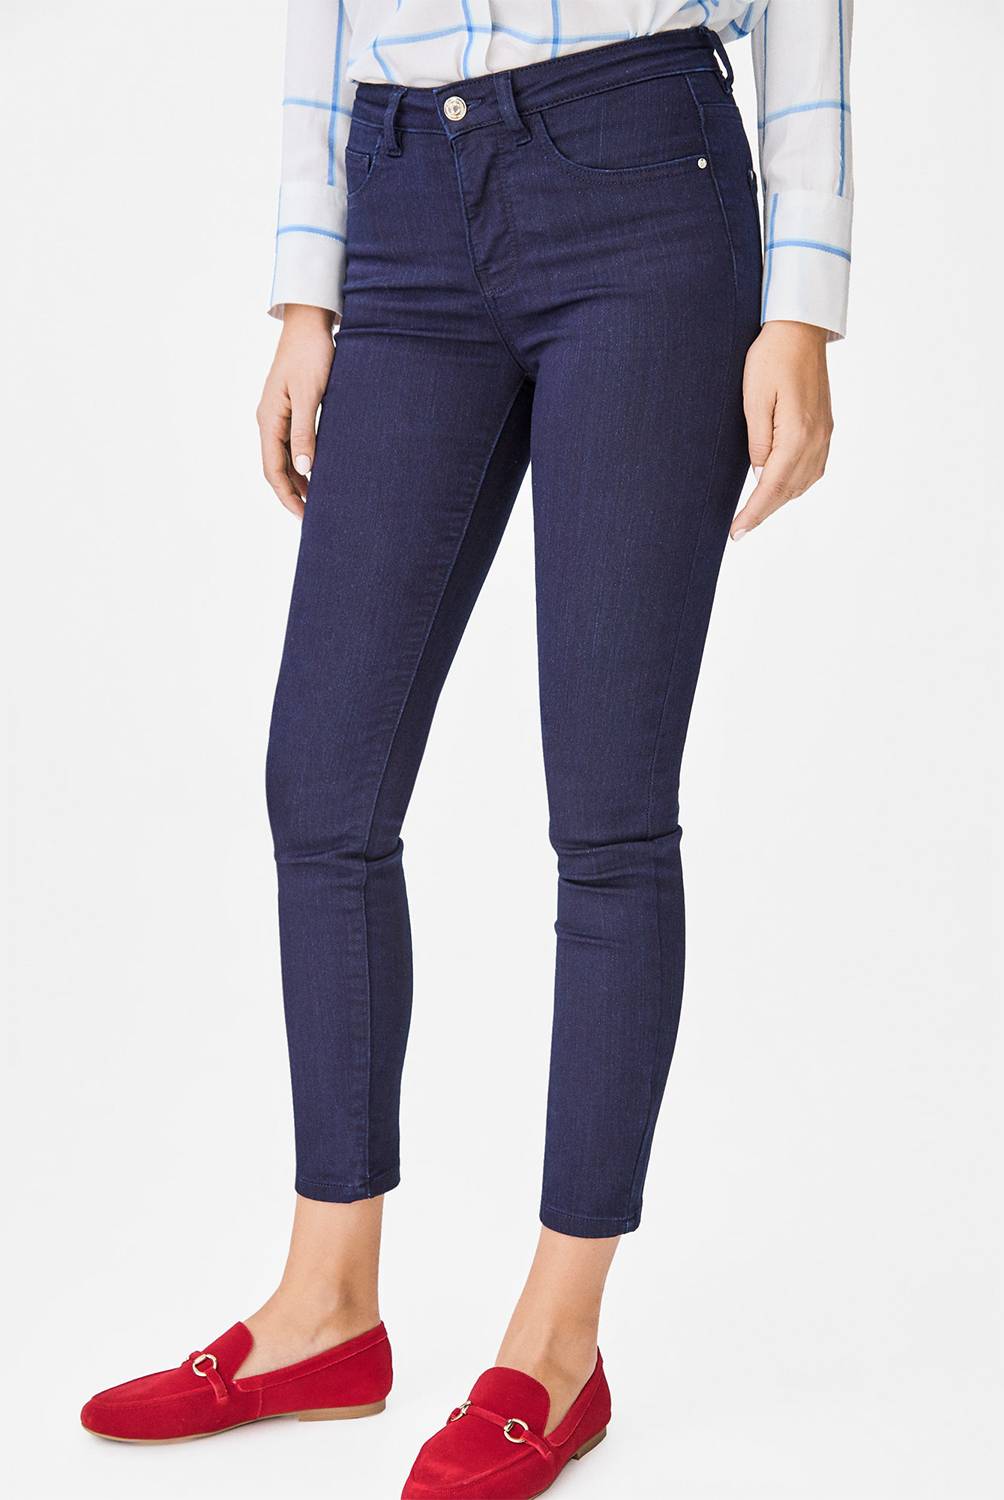 CORTEFIEL - Jeans de Algodón Skinny Mujer